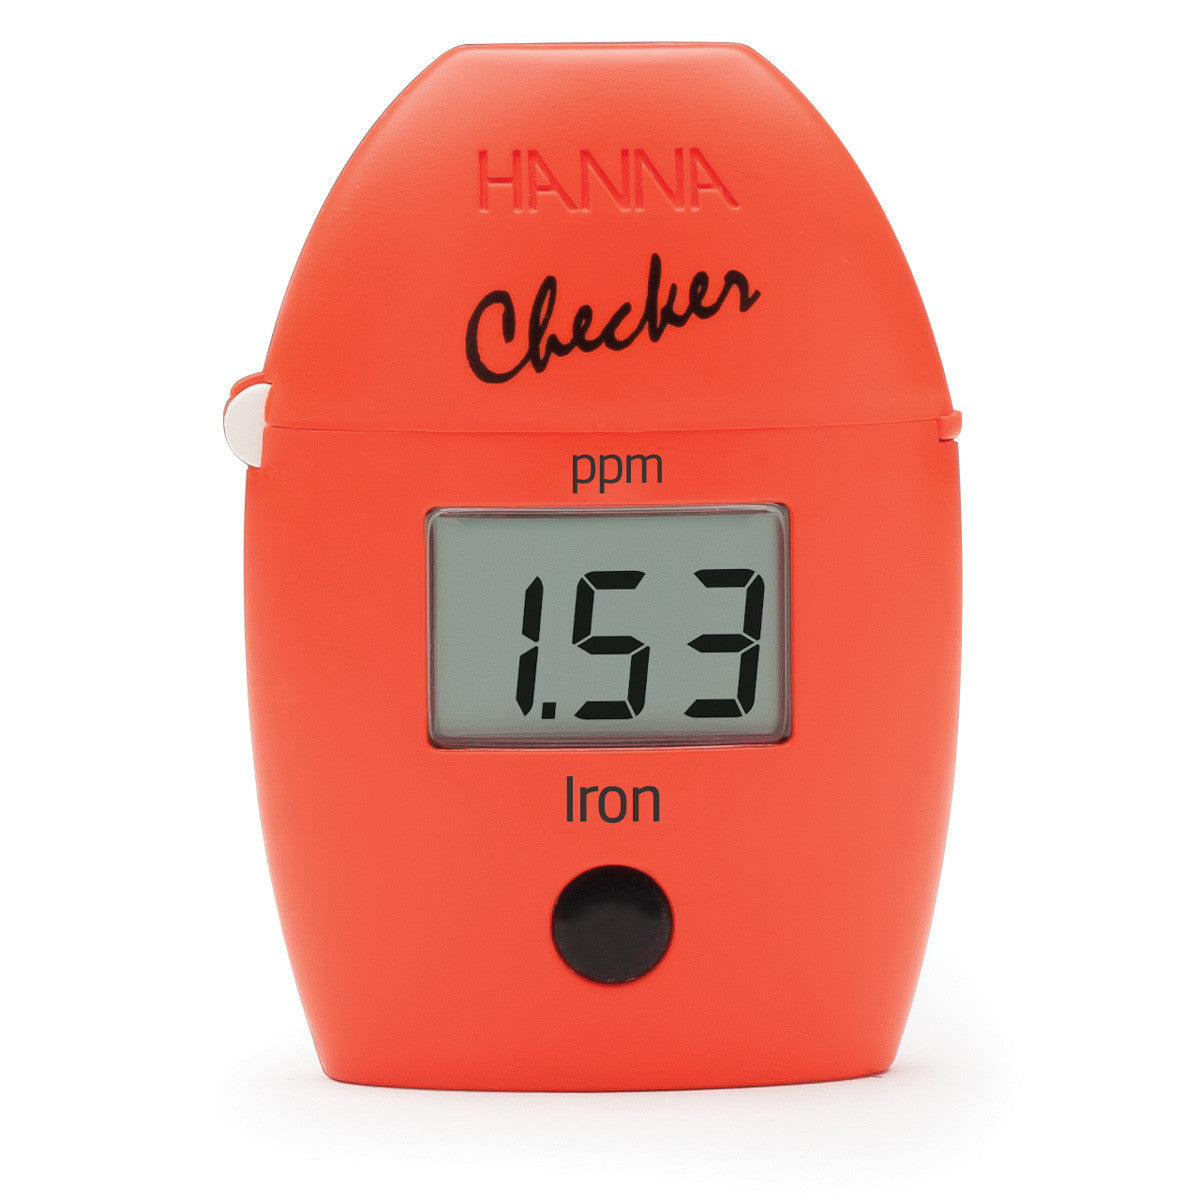 TAS Iron Checker HC, an orange portable colorimeter for precision testing ppm levels.